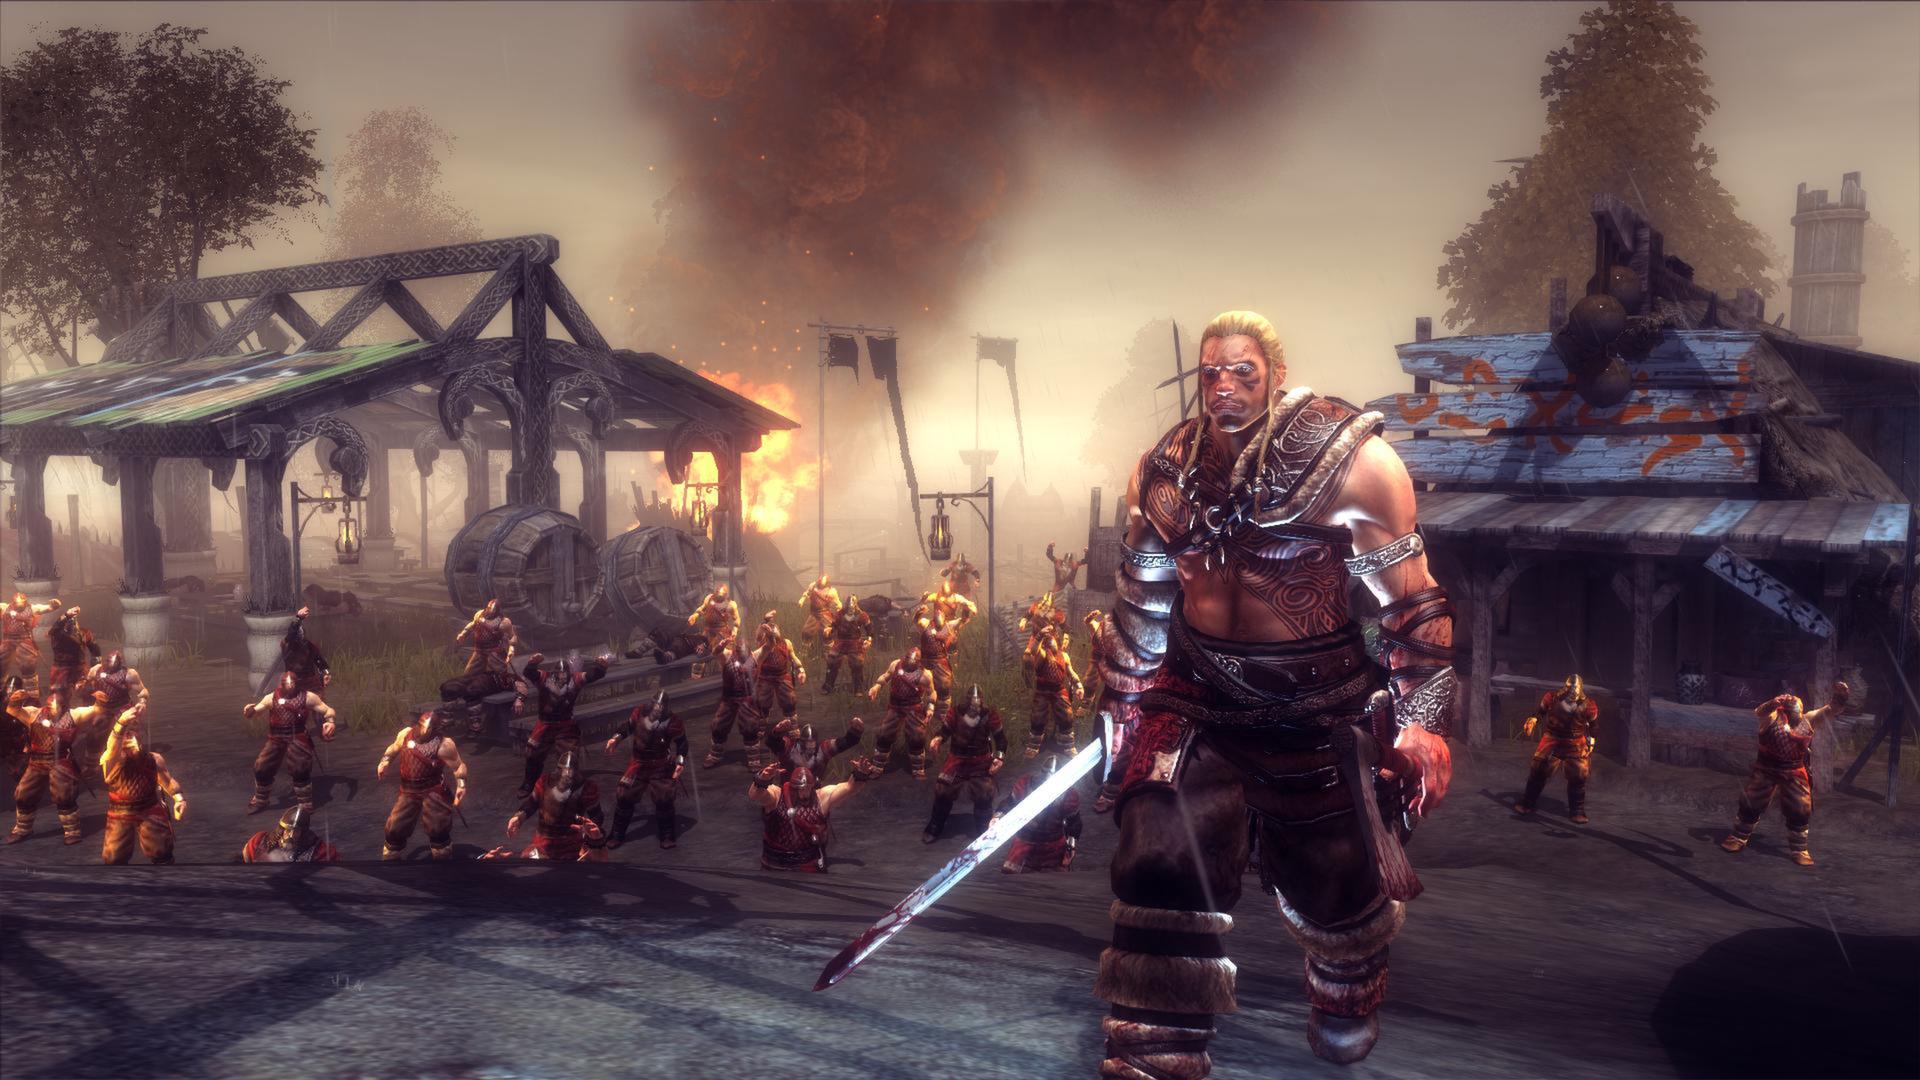 Viking: Battle For Asgard Steam CD Key